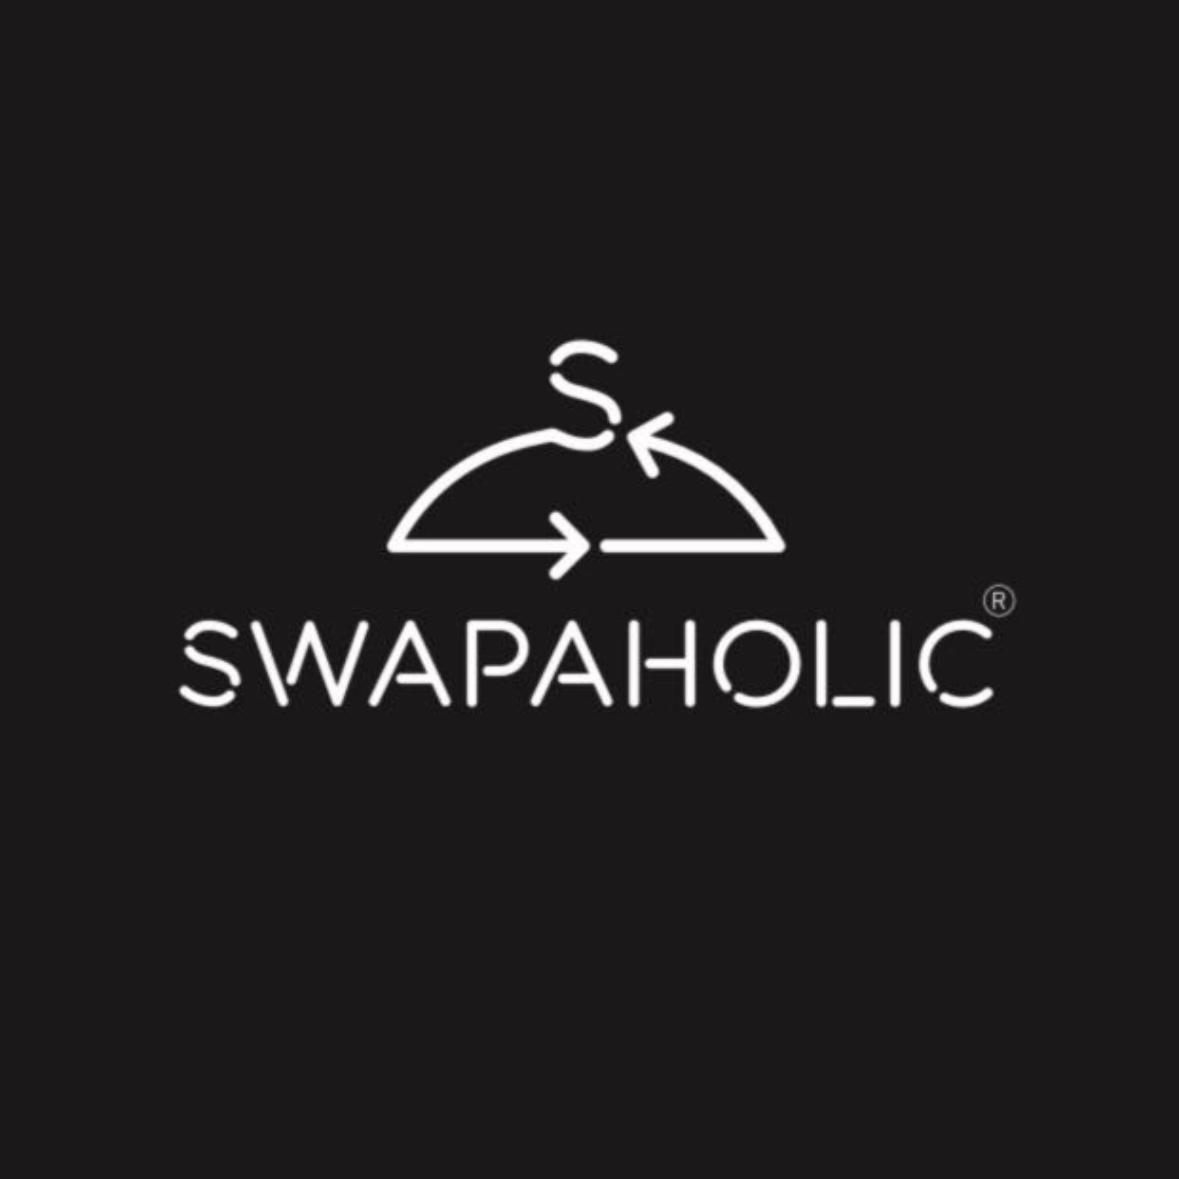 Swapaholic's images